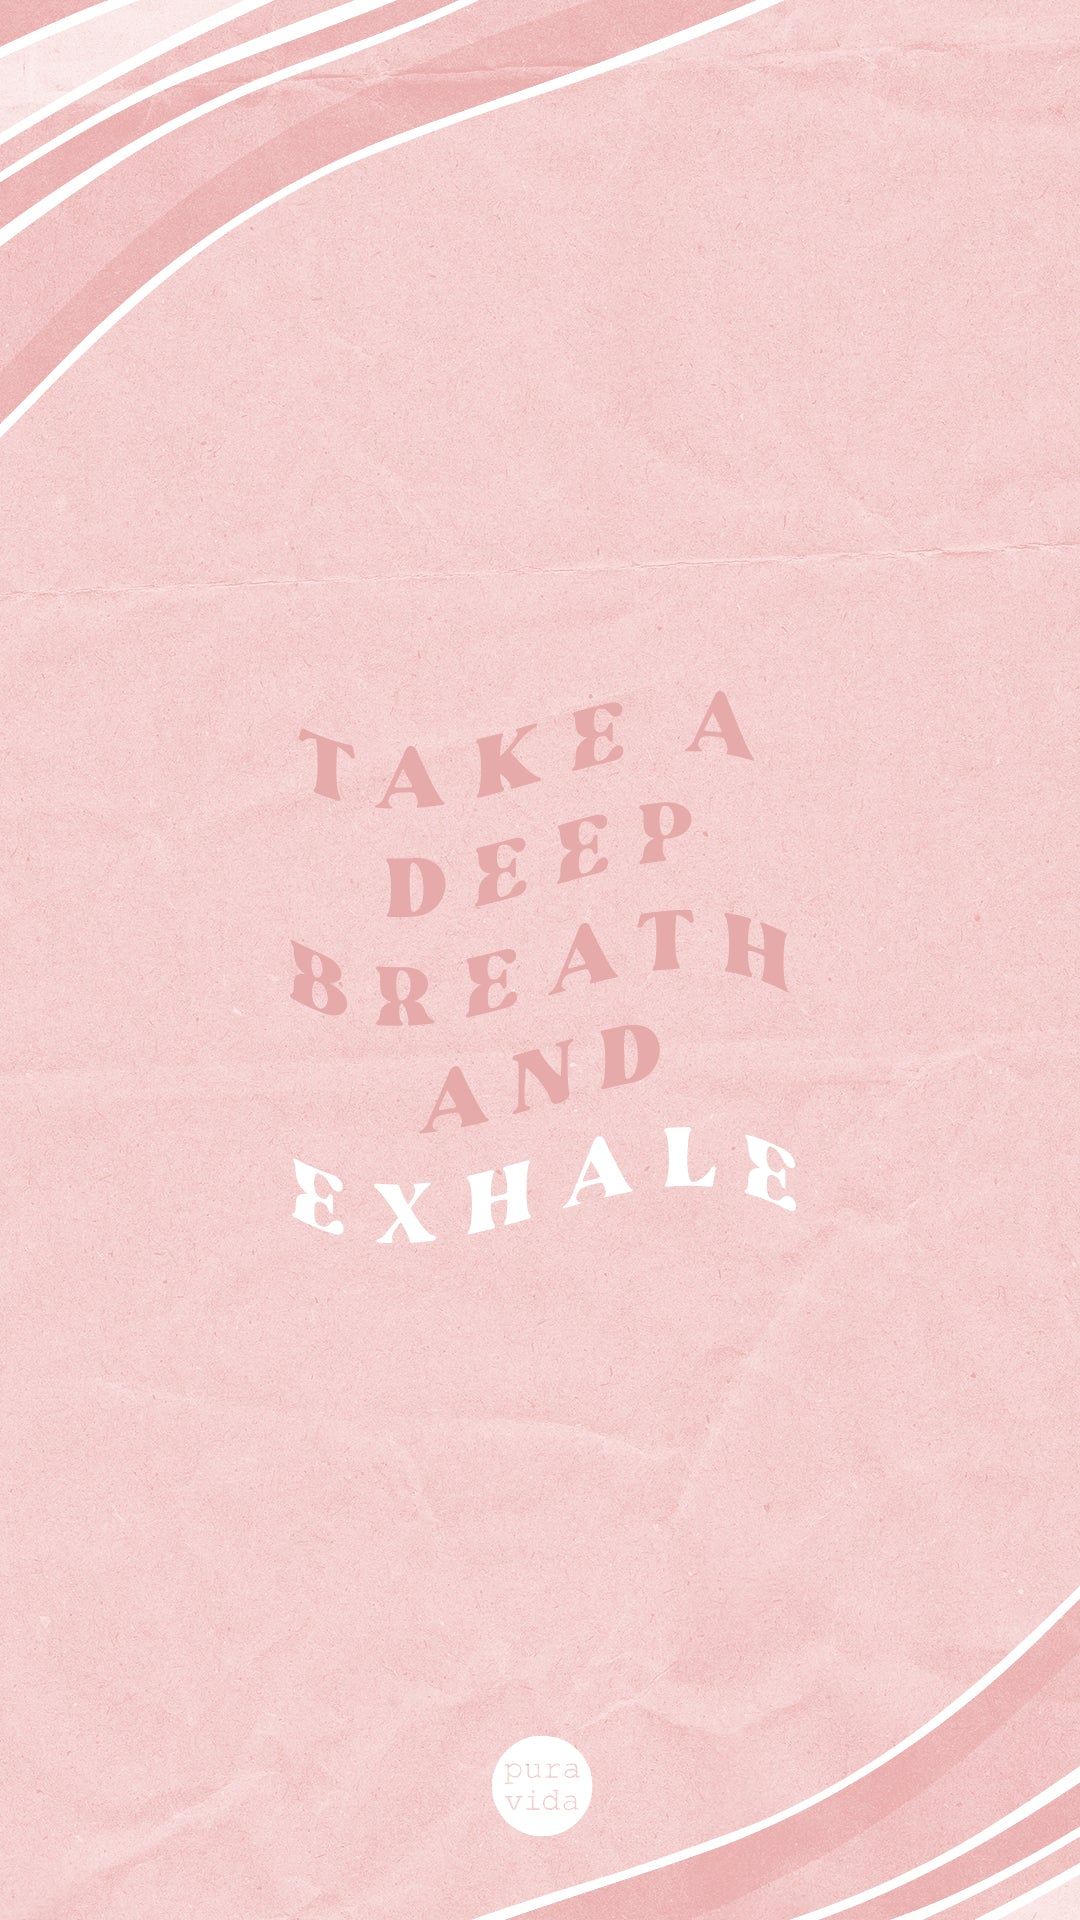 Take a deep breath and exhale. - Mental health